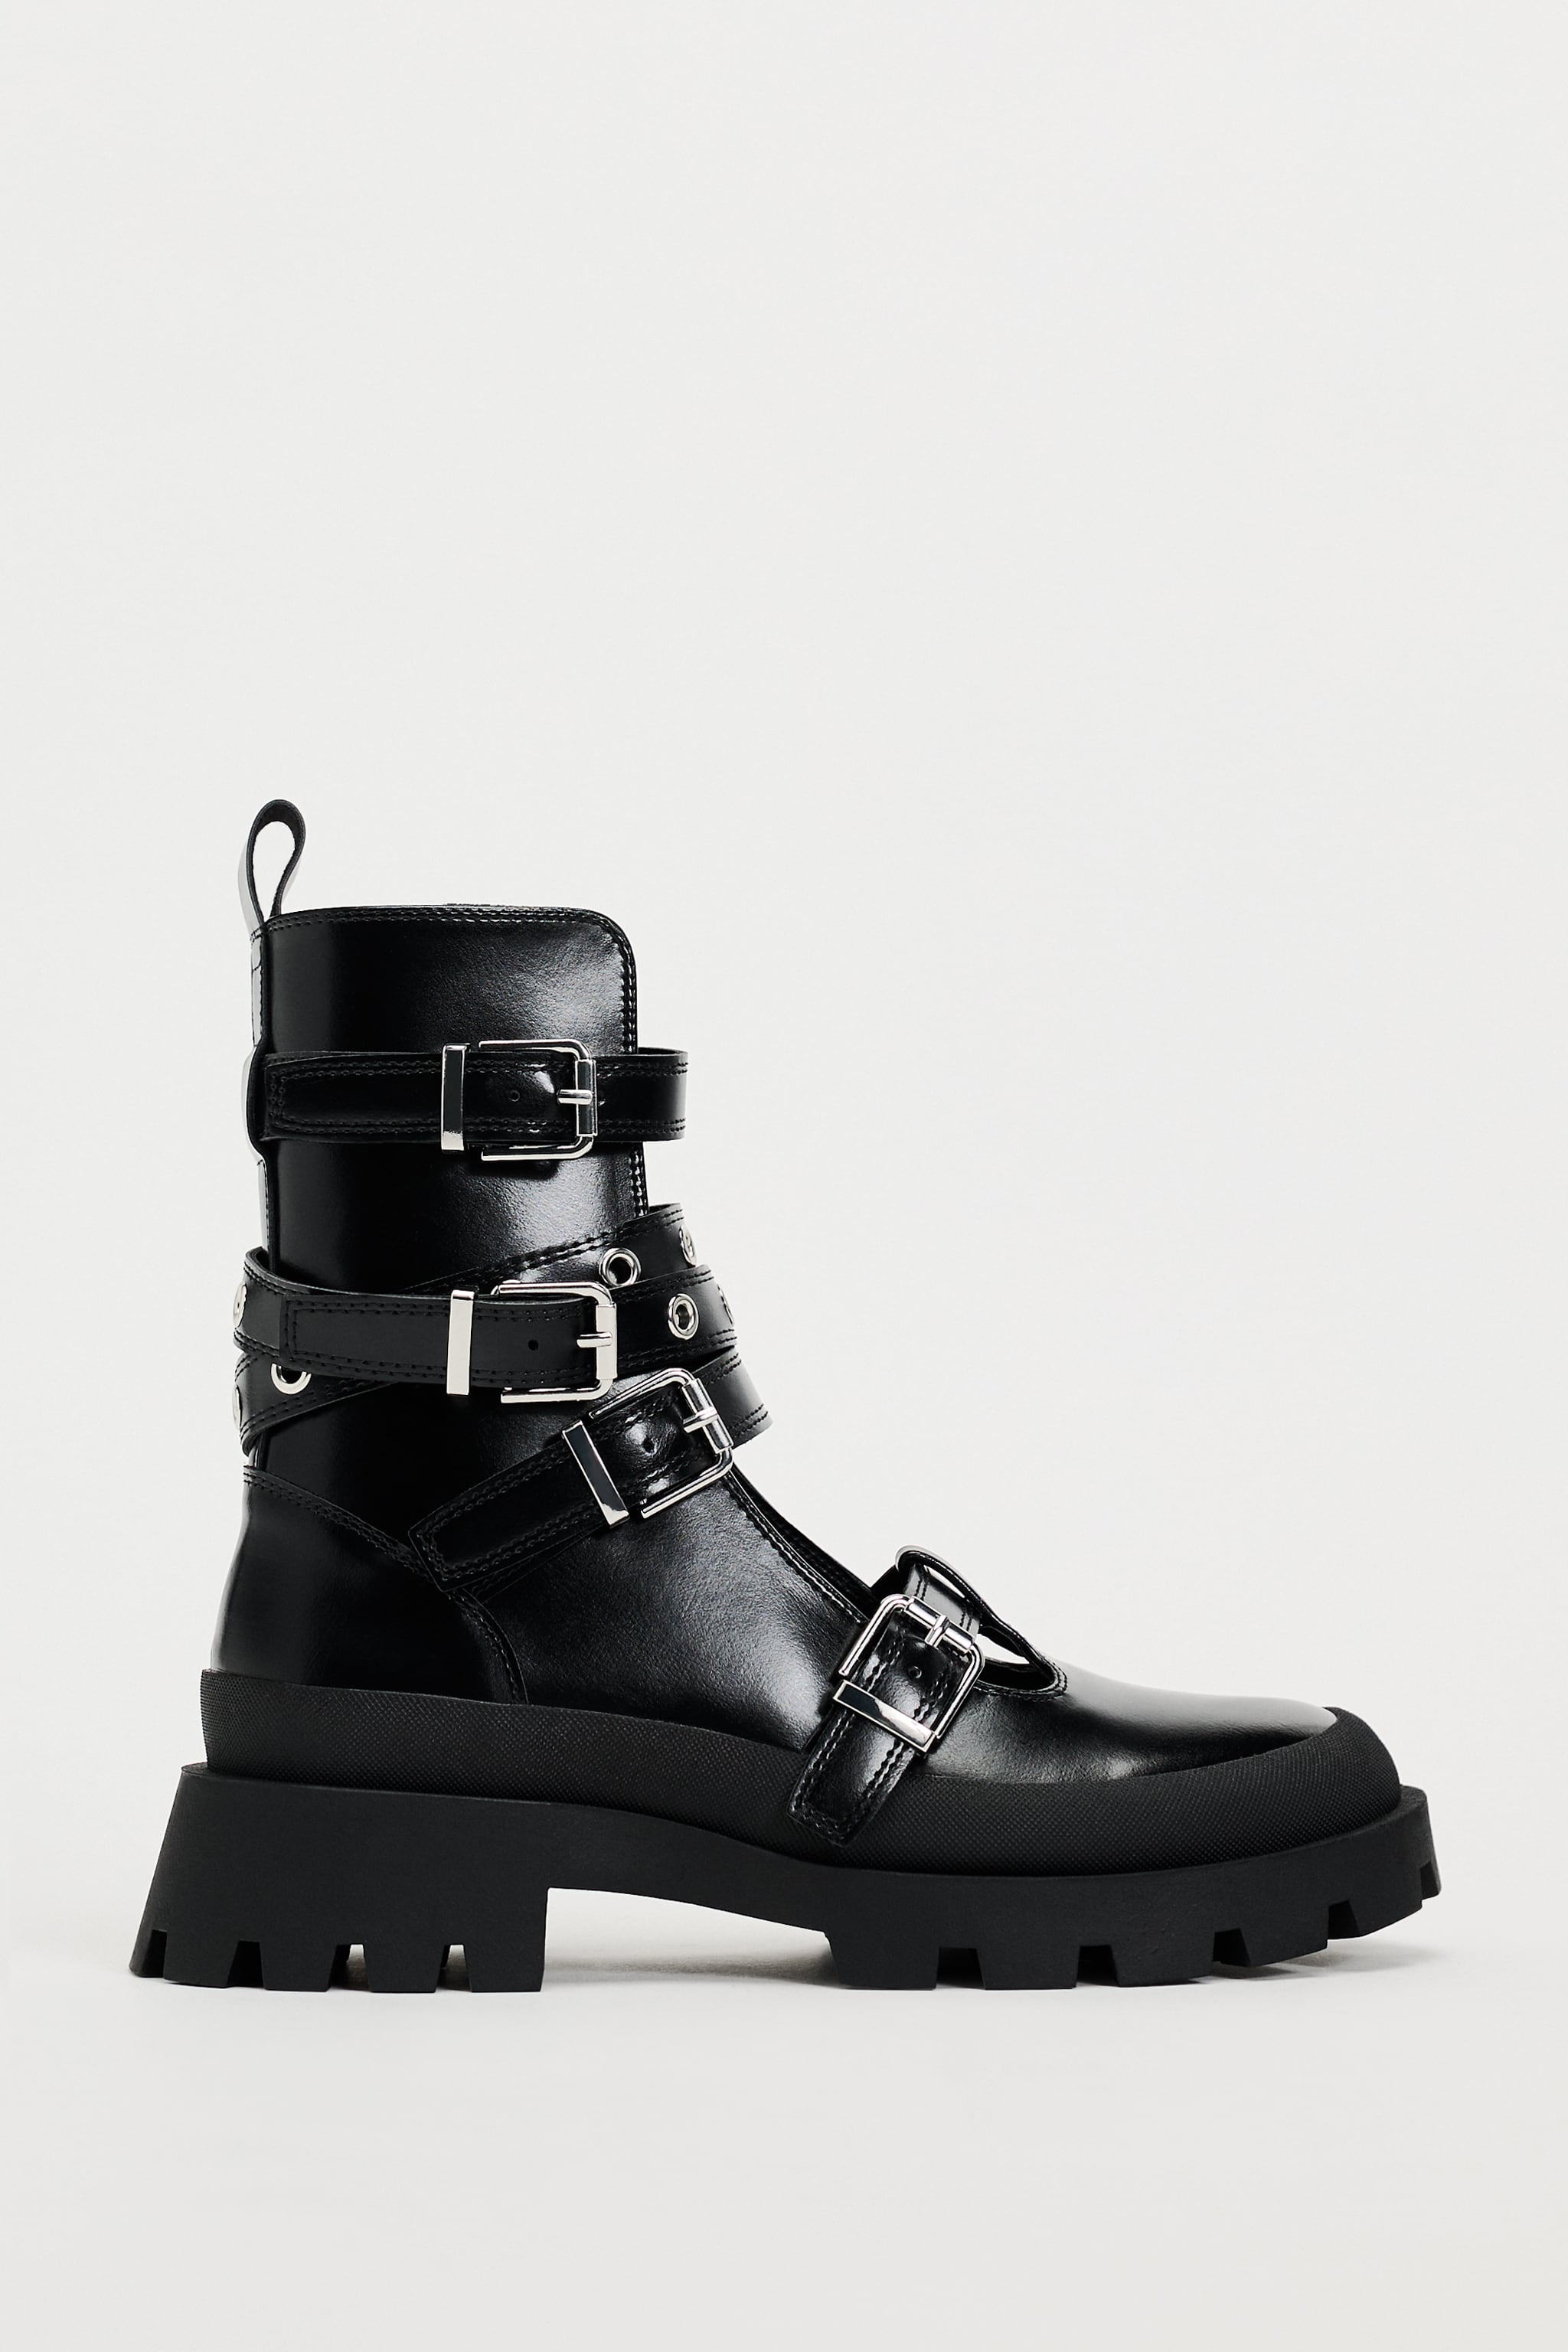 Zara + Note Sole Boots